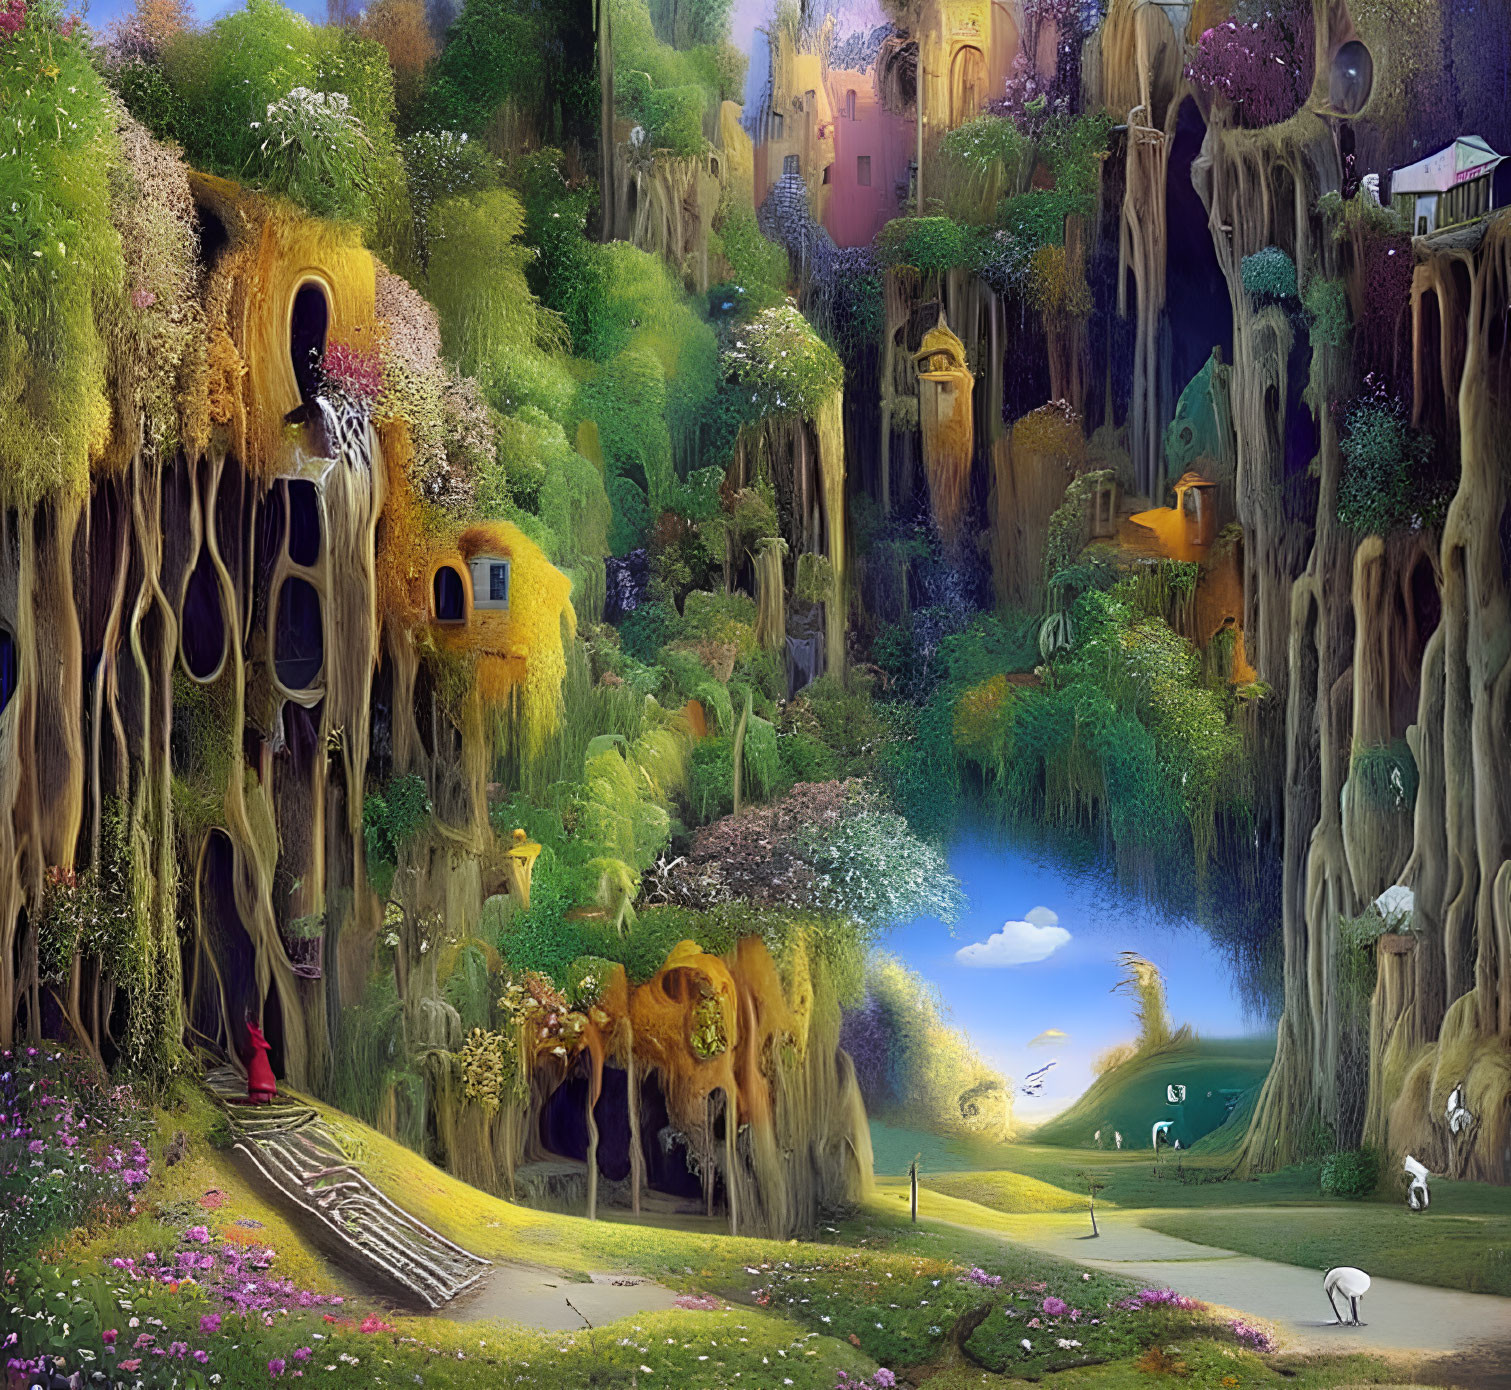 Whimsical tree houses in vibrant fantasy landscape